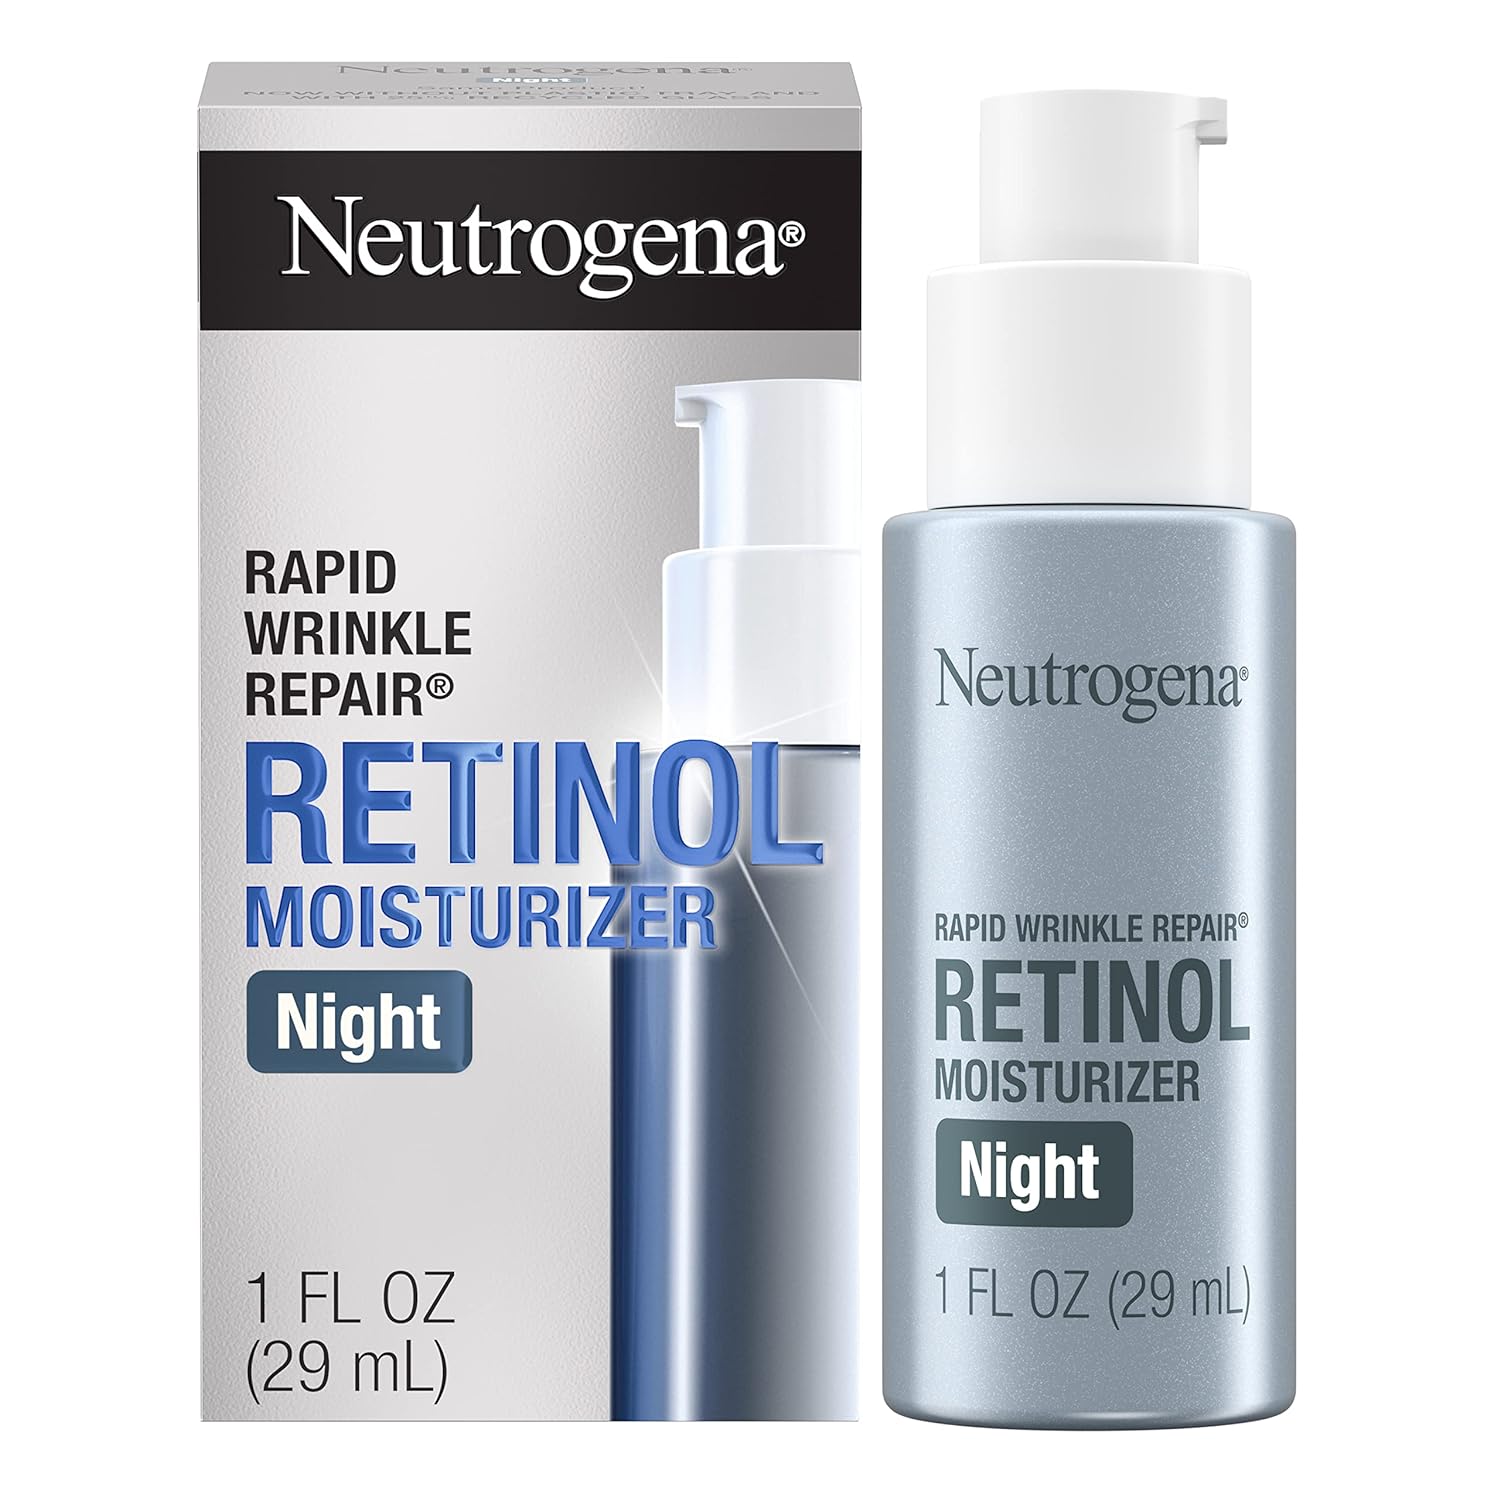 Neutrogena Rapid Wrinkle Repair Retinol Night Face Moisturizer, Daily Anti-Aging Face Cream with Ret